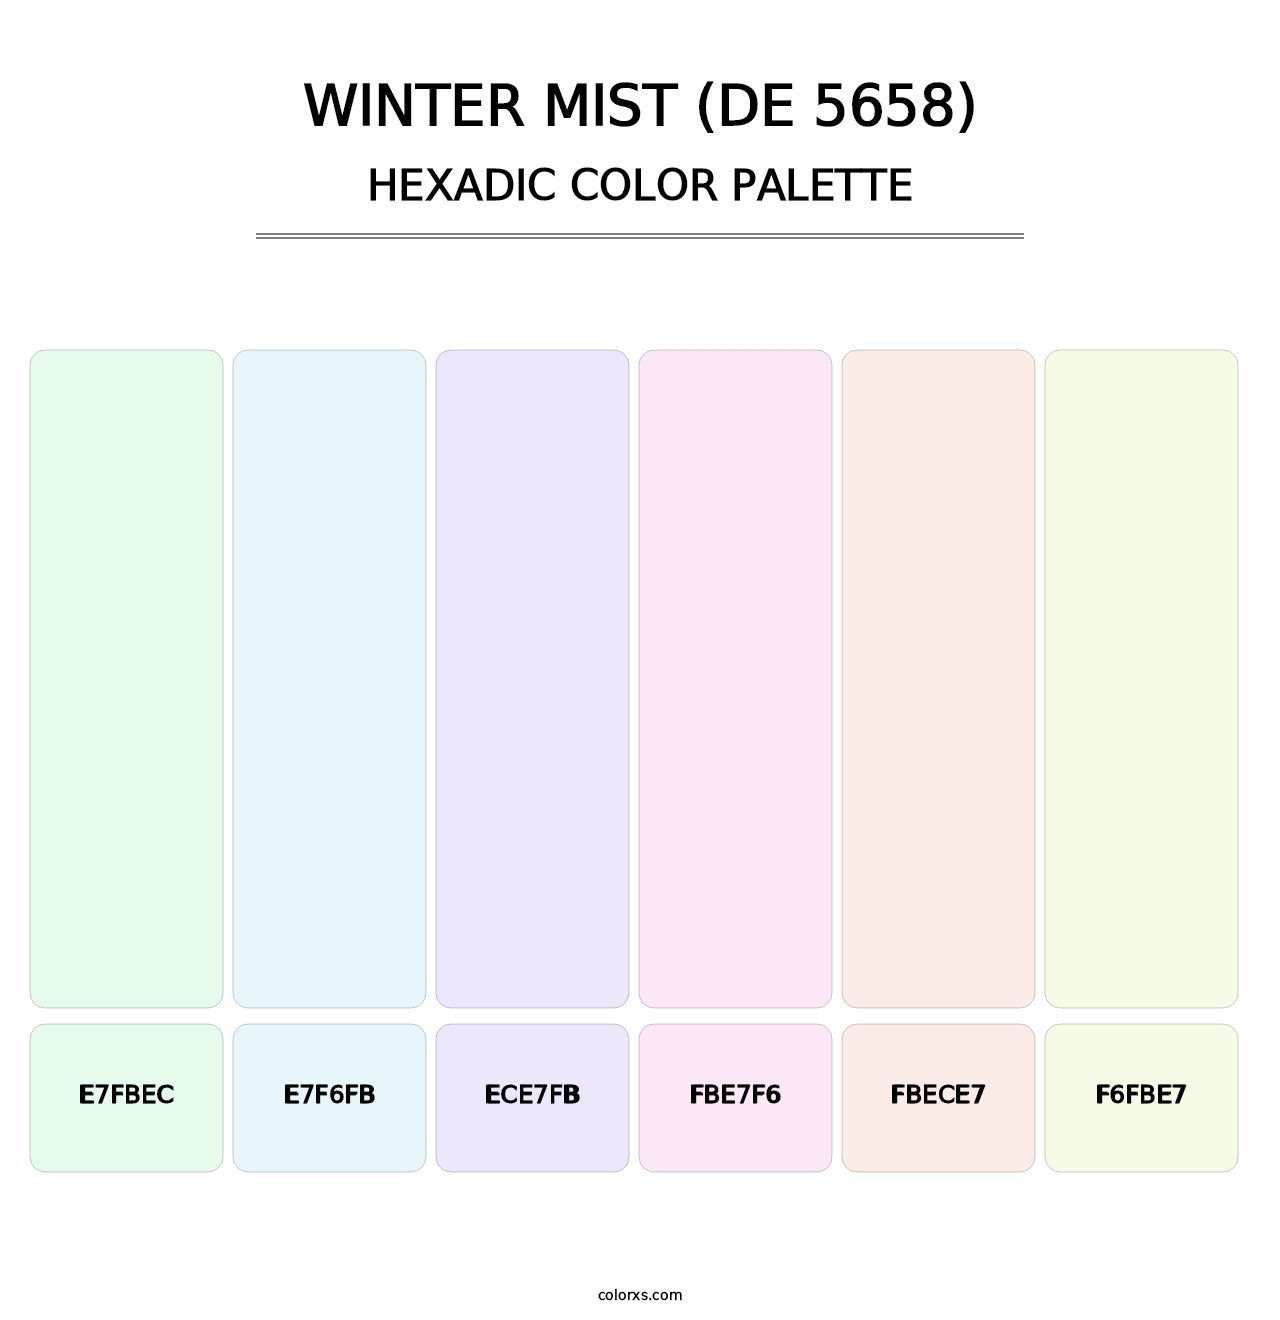 Winter Mist (DE 5658) - Hexadic Color Palette